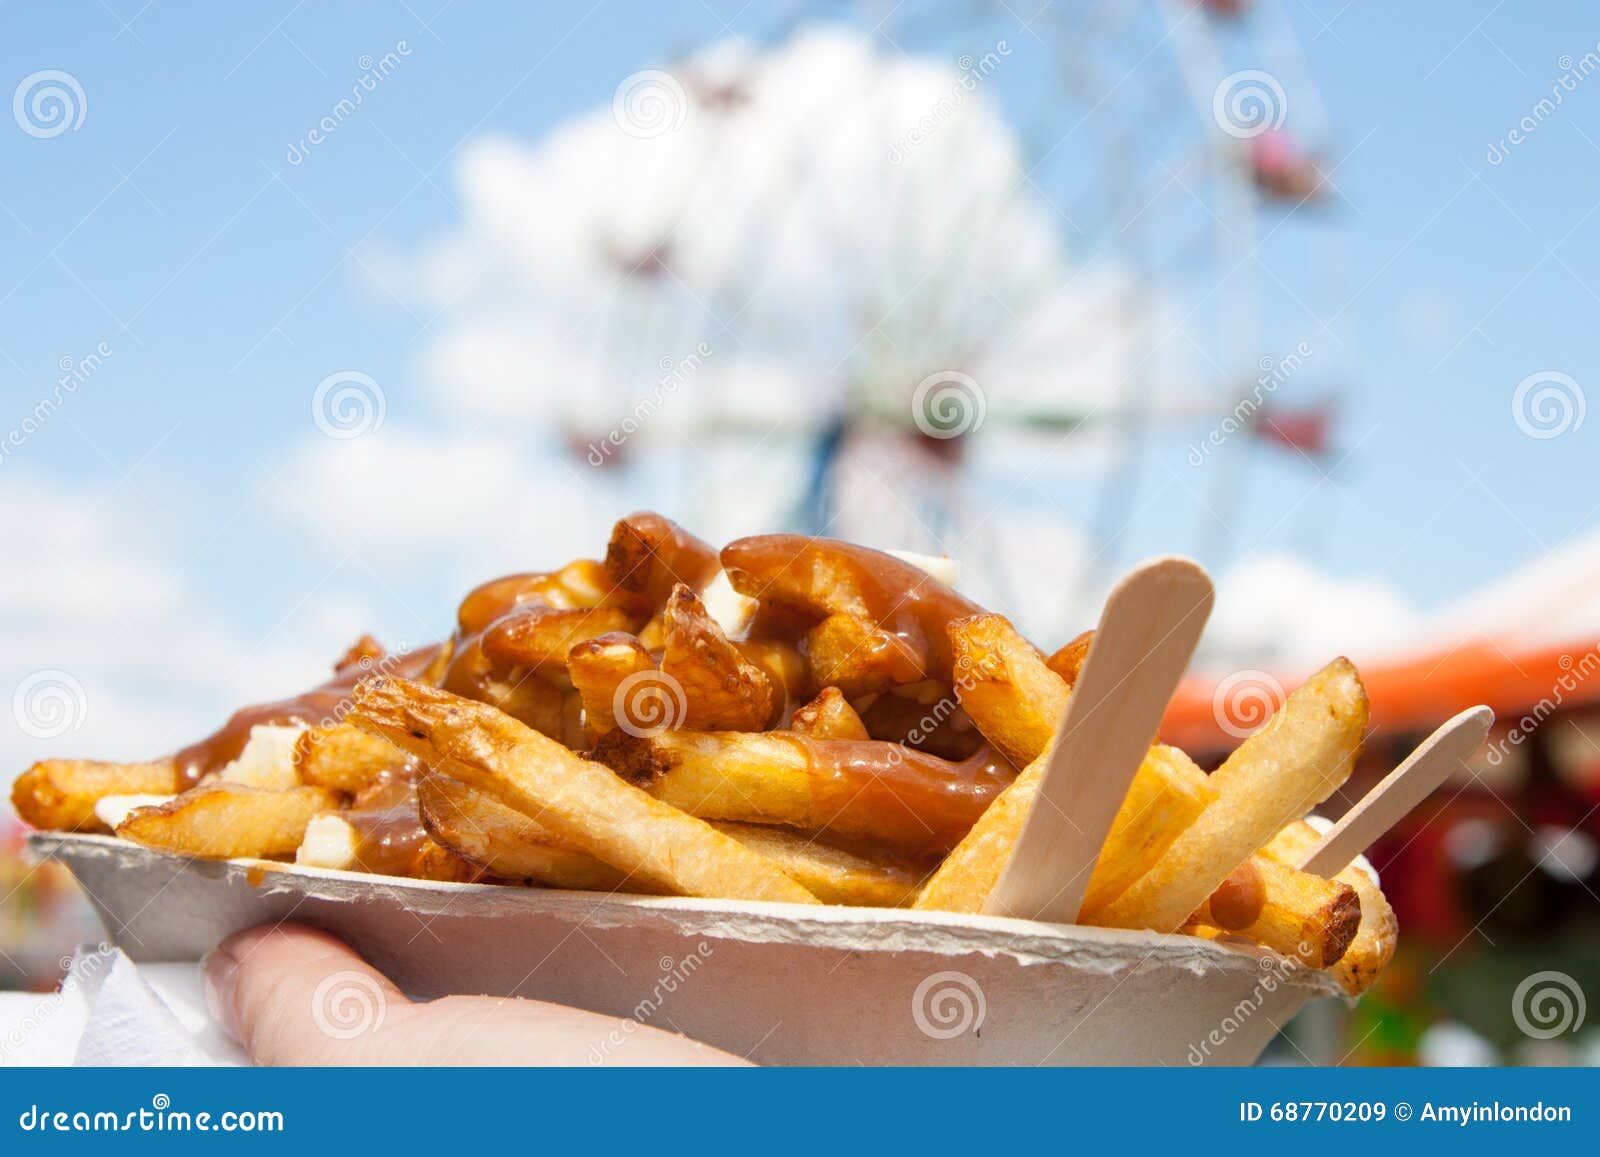 fries at fall fair